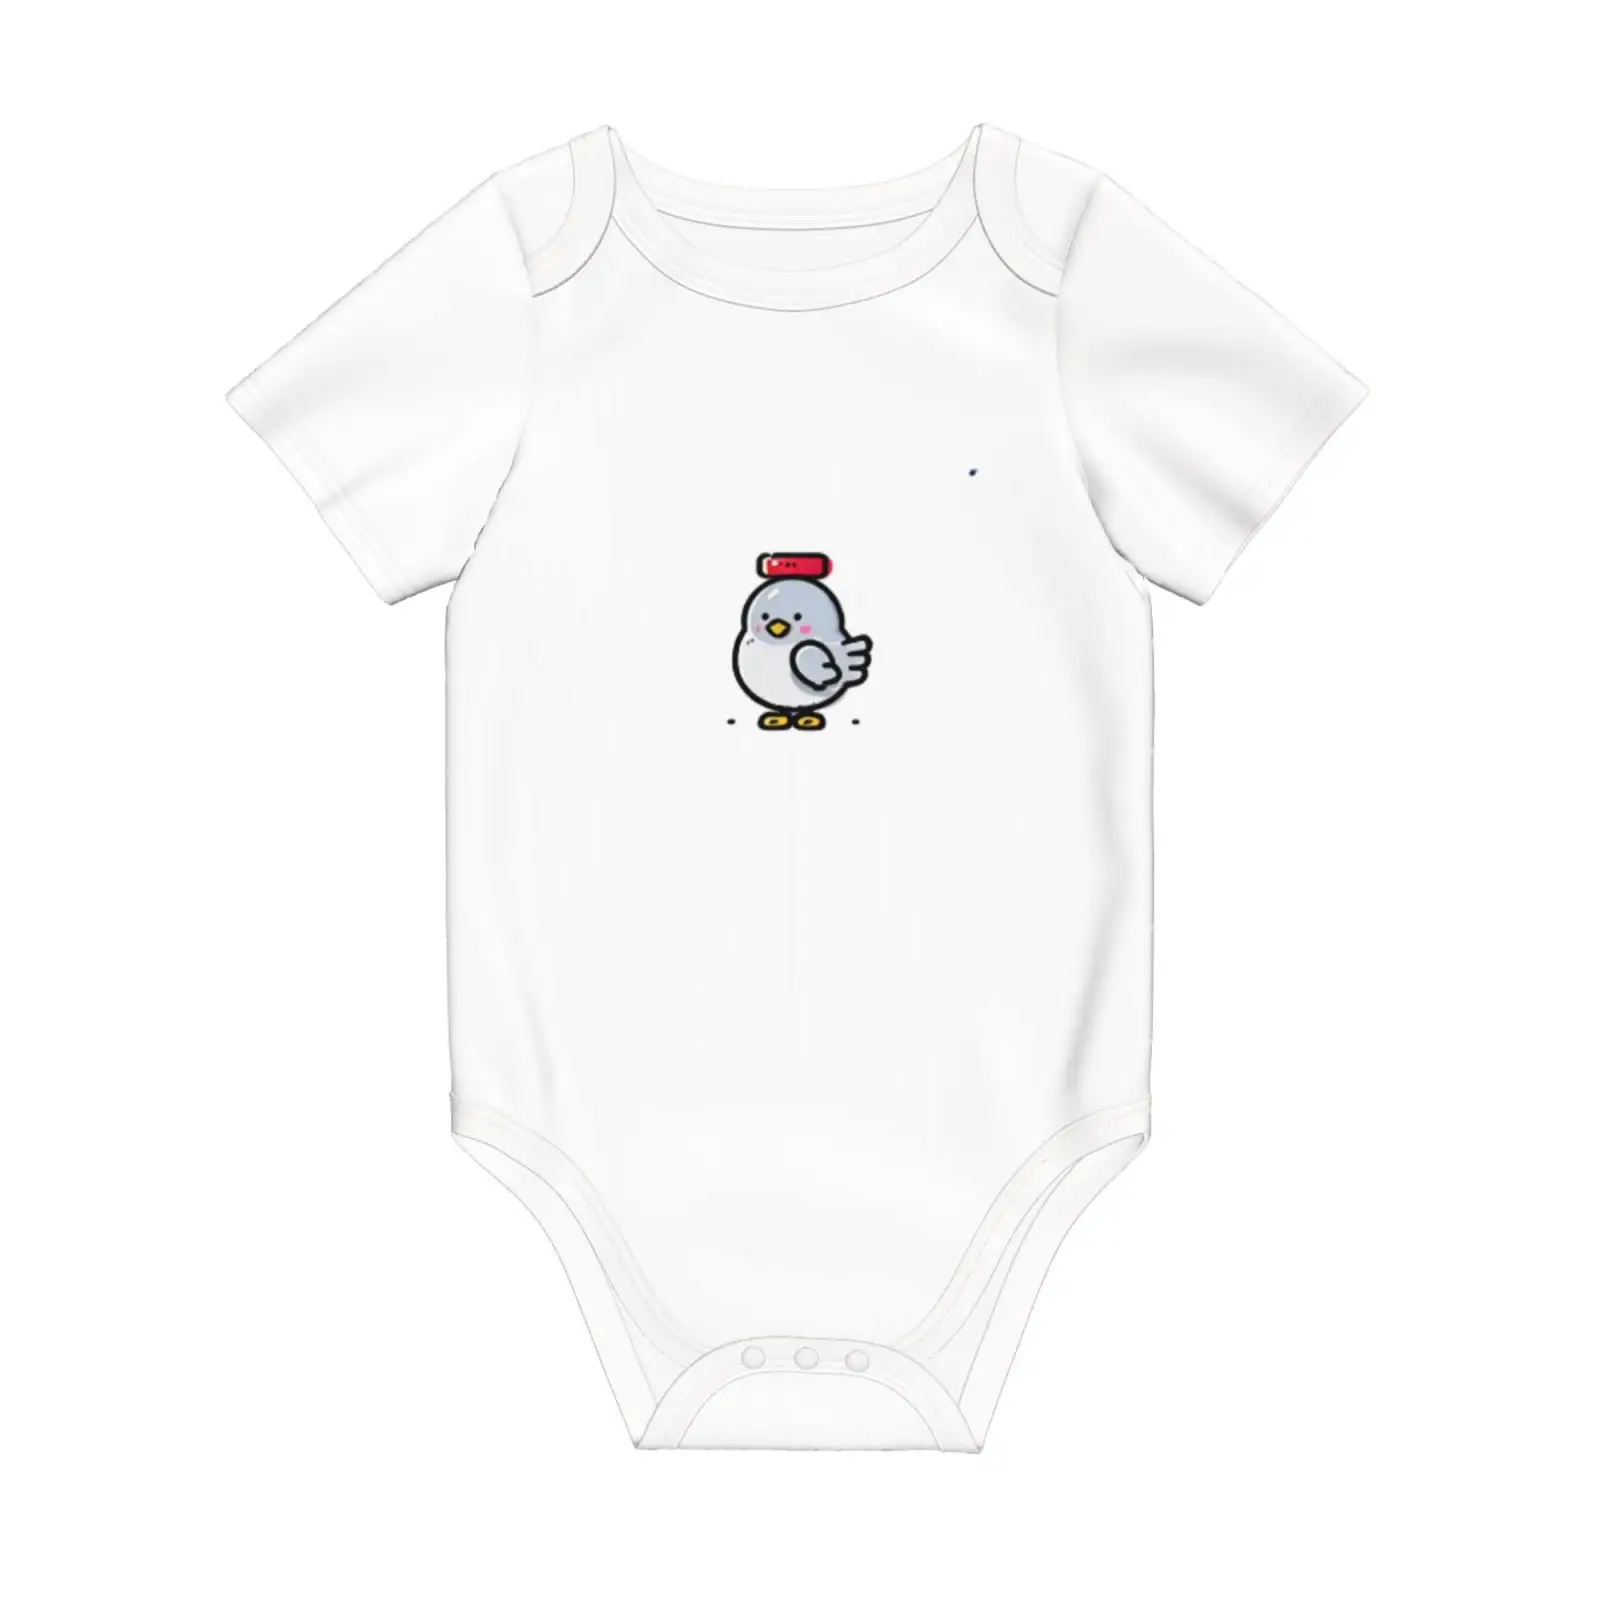 Little Q Chicken Novelty Baby Short Sleeve Climbing Clothes, All Cotton. Custom Made